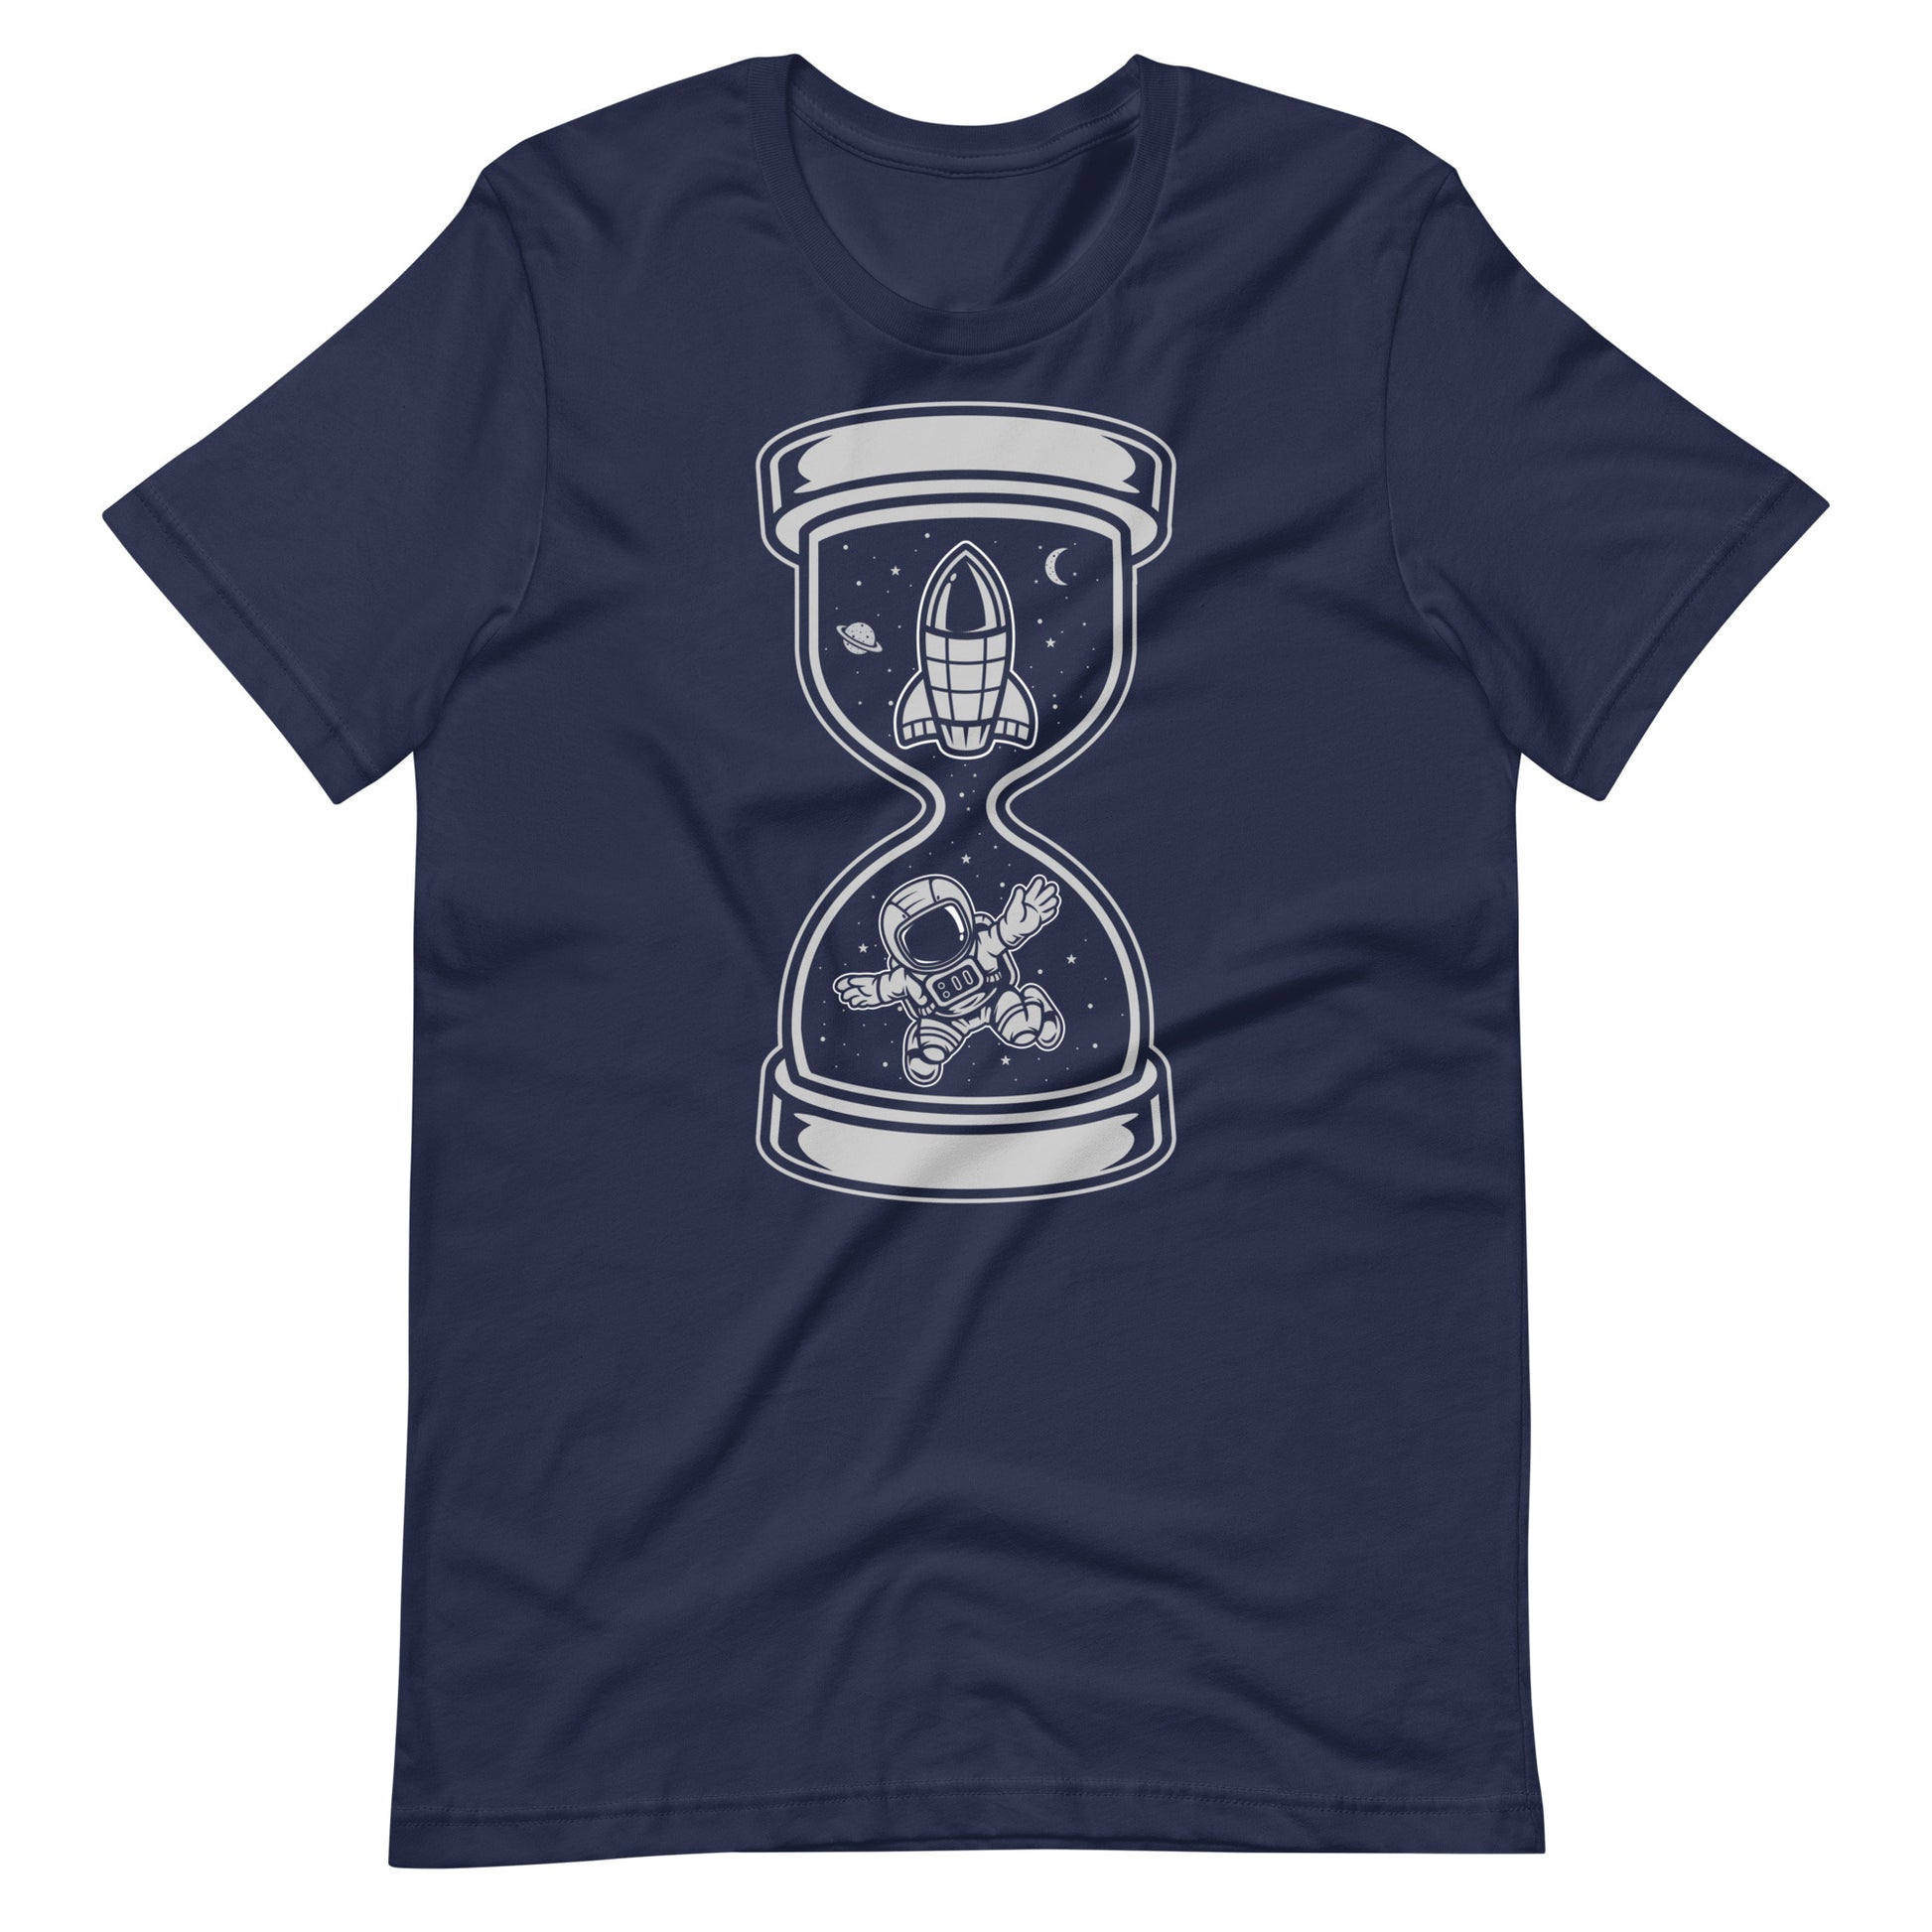 Astronaut Time - Men's t-shirt - Navy Front